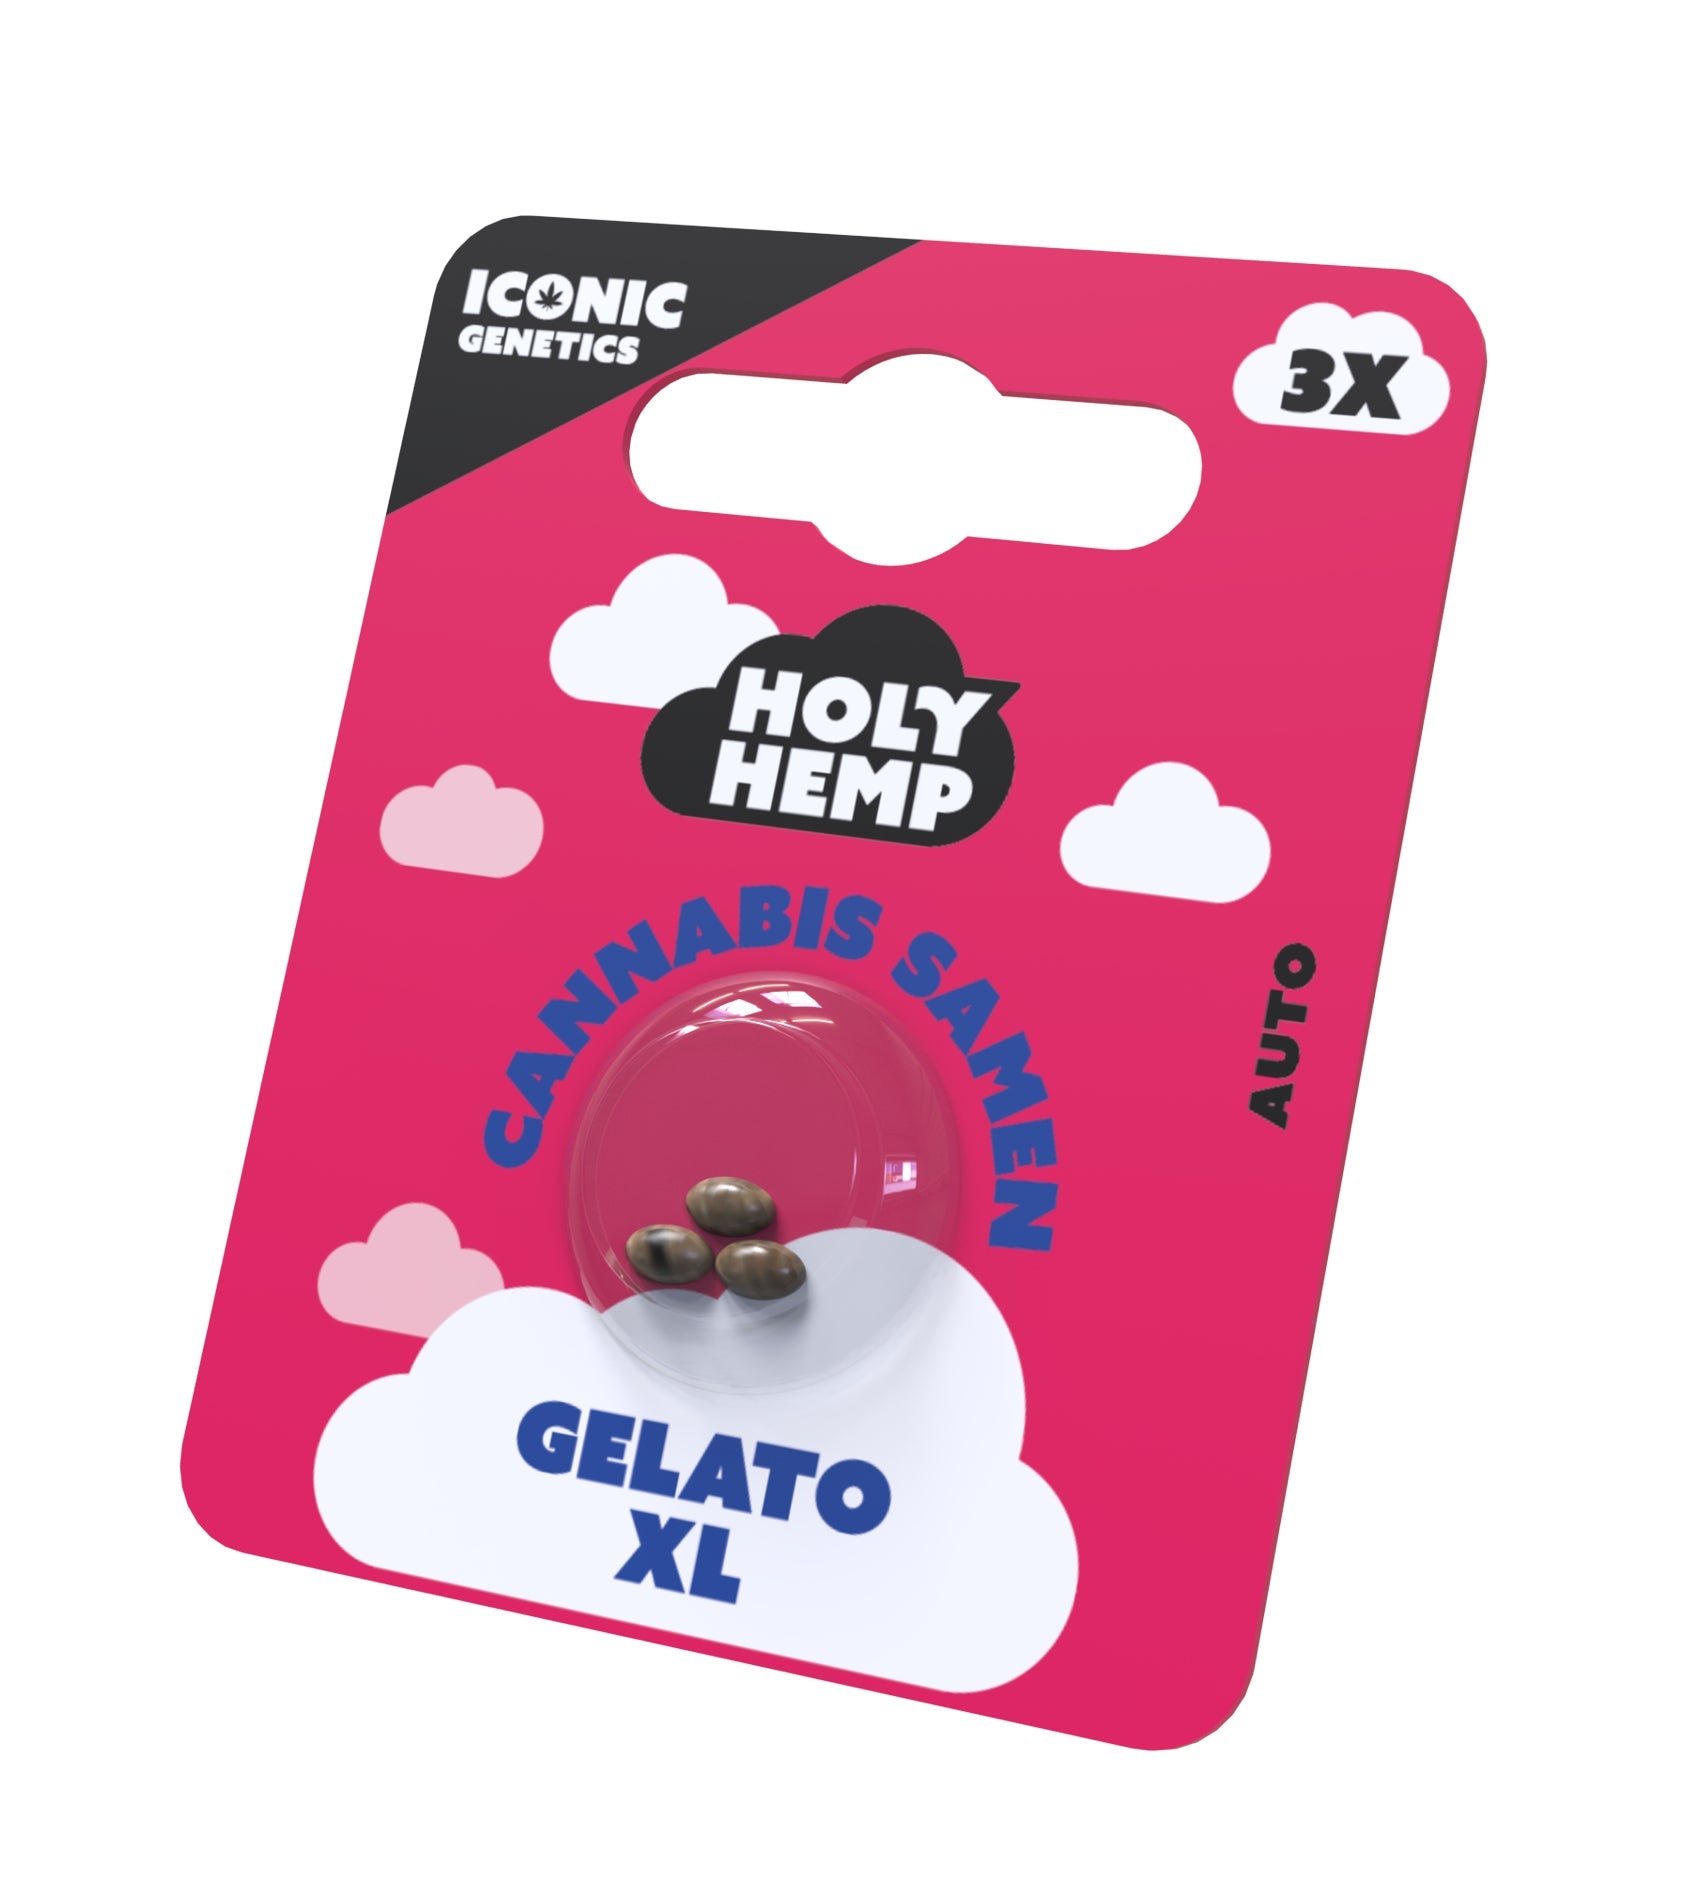 Gelato XL Cannabissamen - Iconic Seeds Holy Hemp